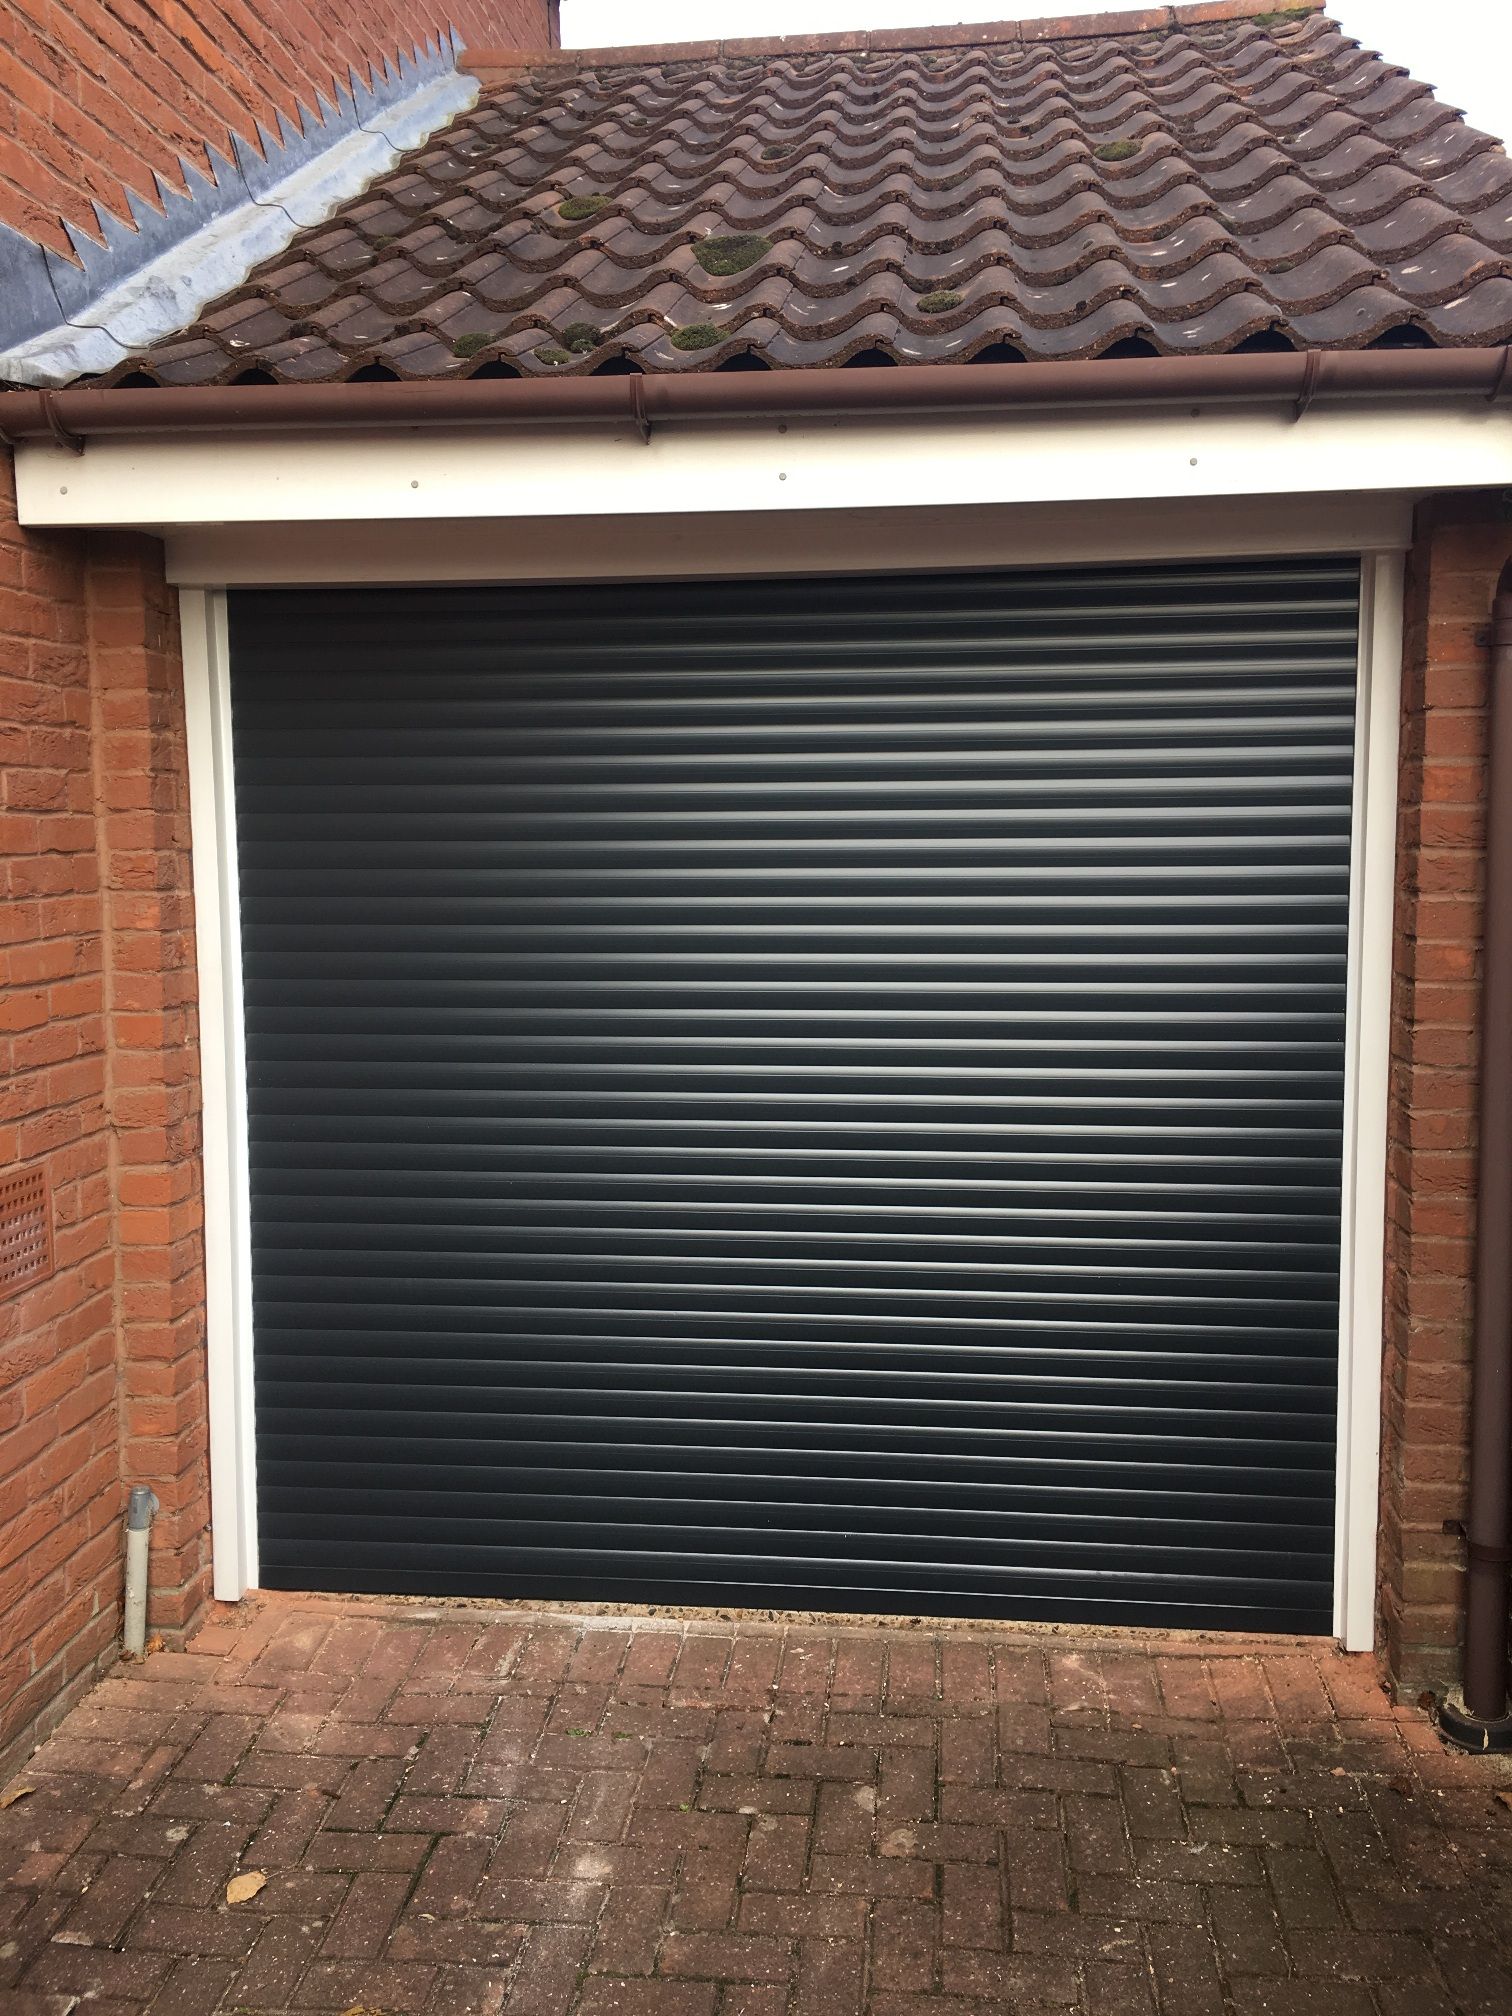 An anthracite garage door